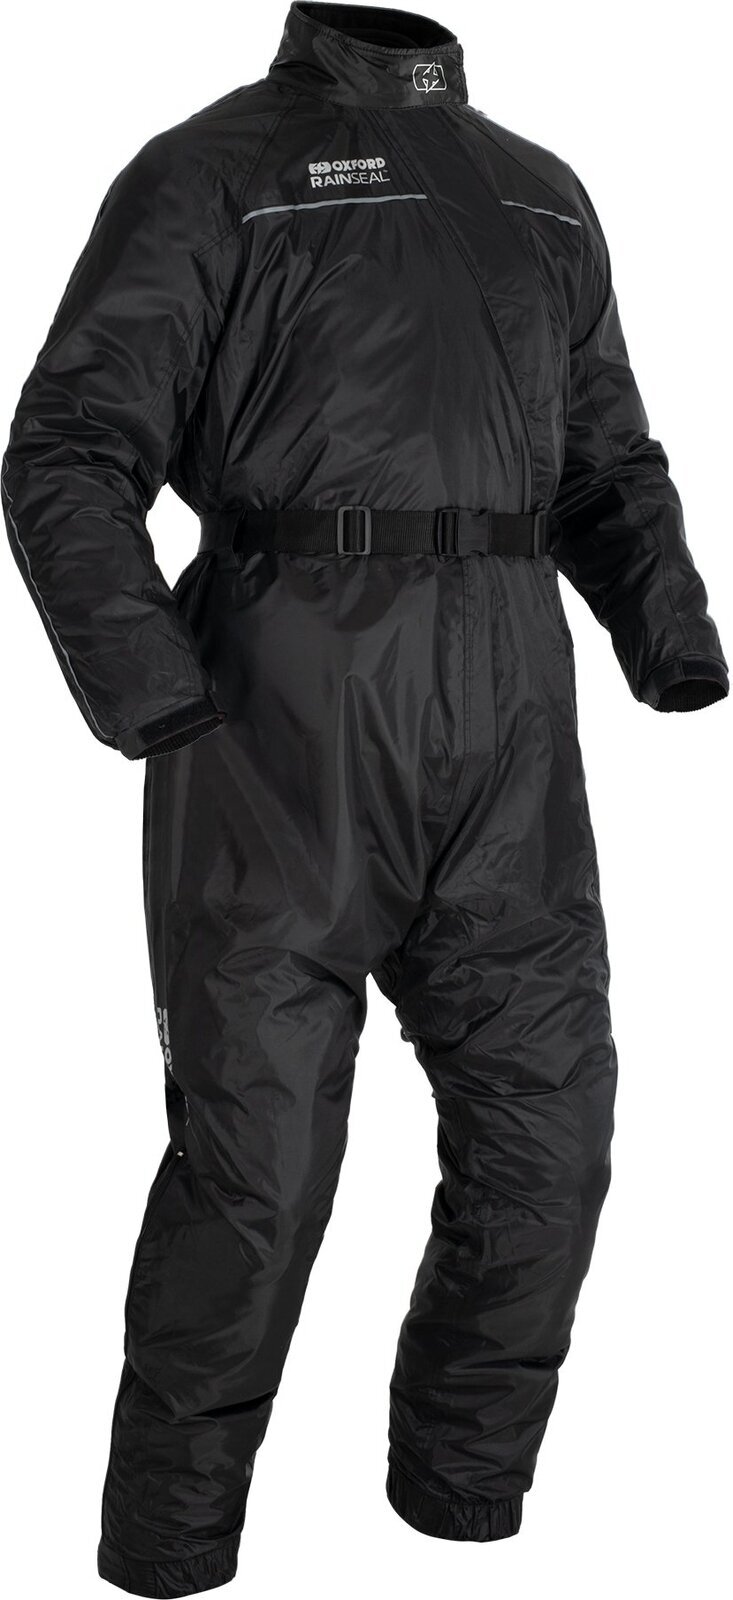 Motorcycle Rain Suit Oxford Rainseal Oversuit Black 2XL